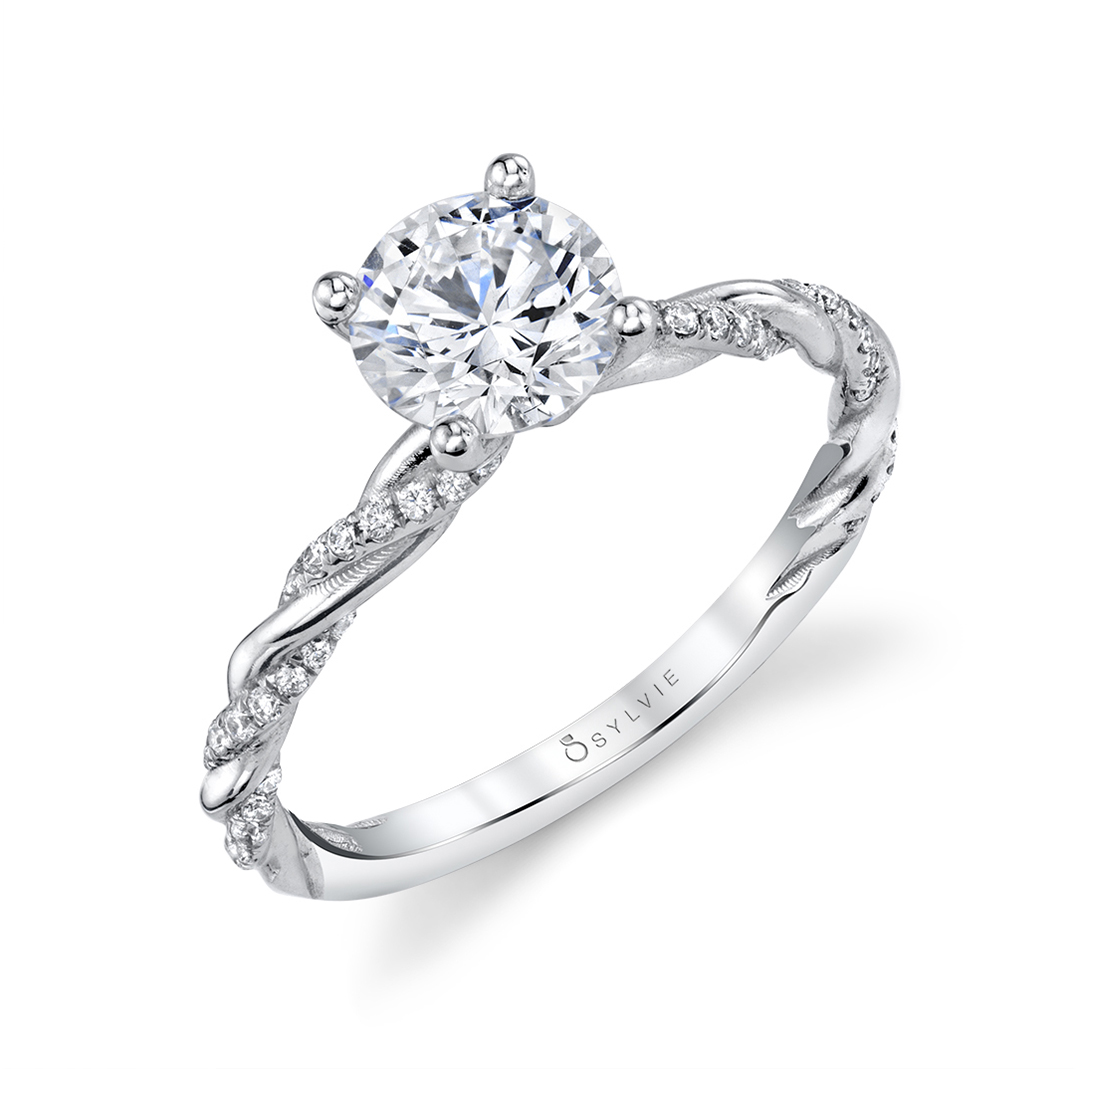 Unique Spiral Engagement Ring - Jolie  Stuart Benjamin & Co. Jewelry Designs San Diego, CA